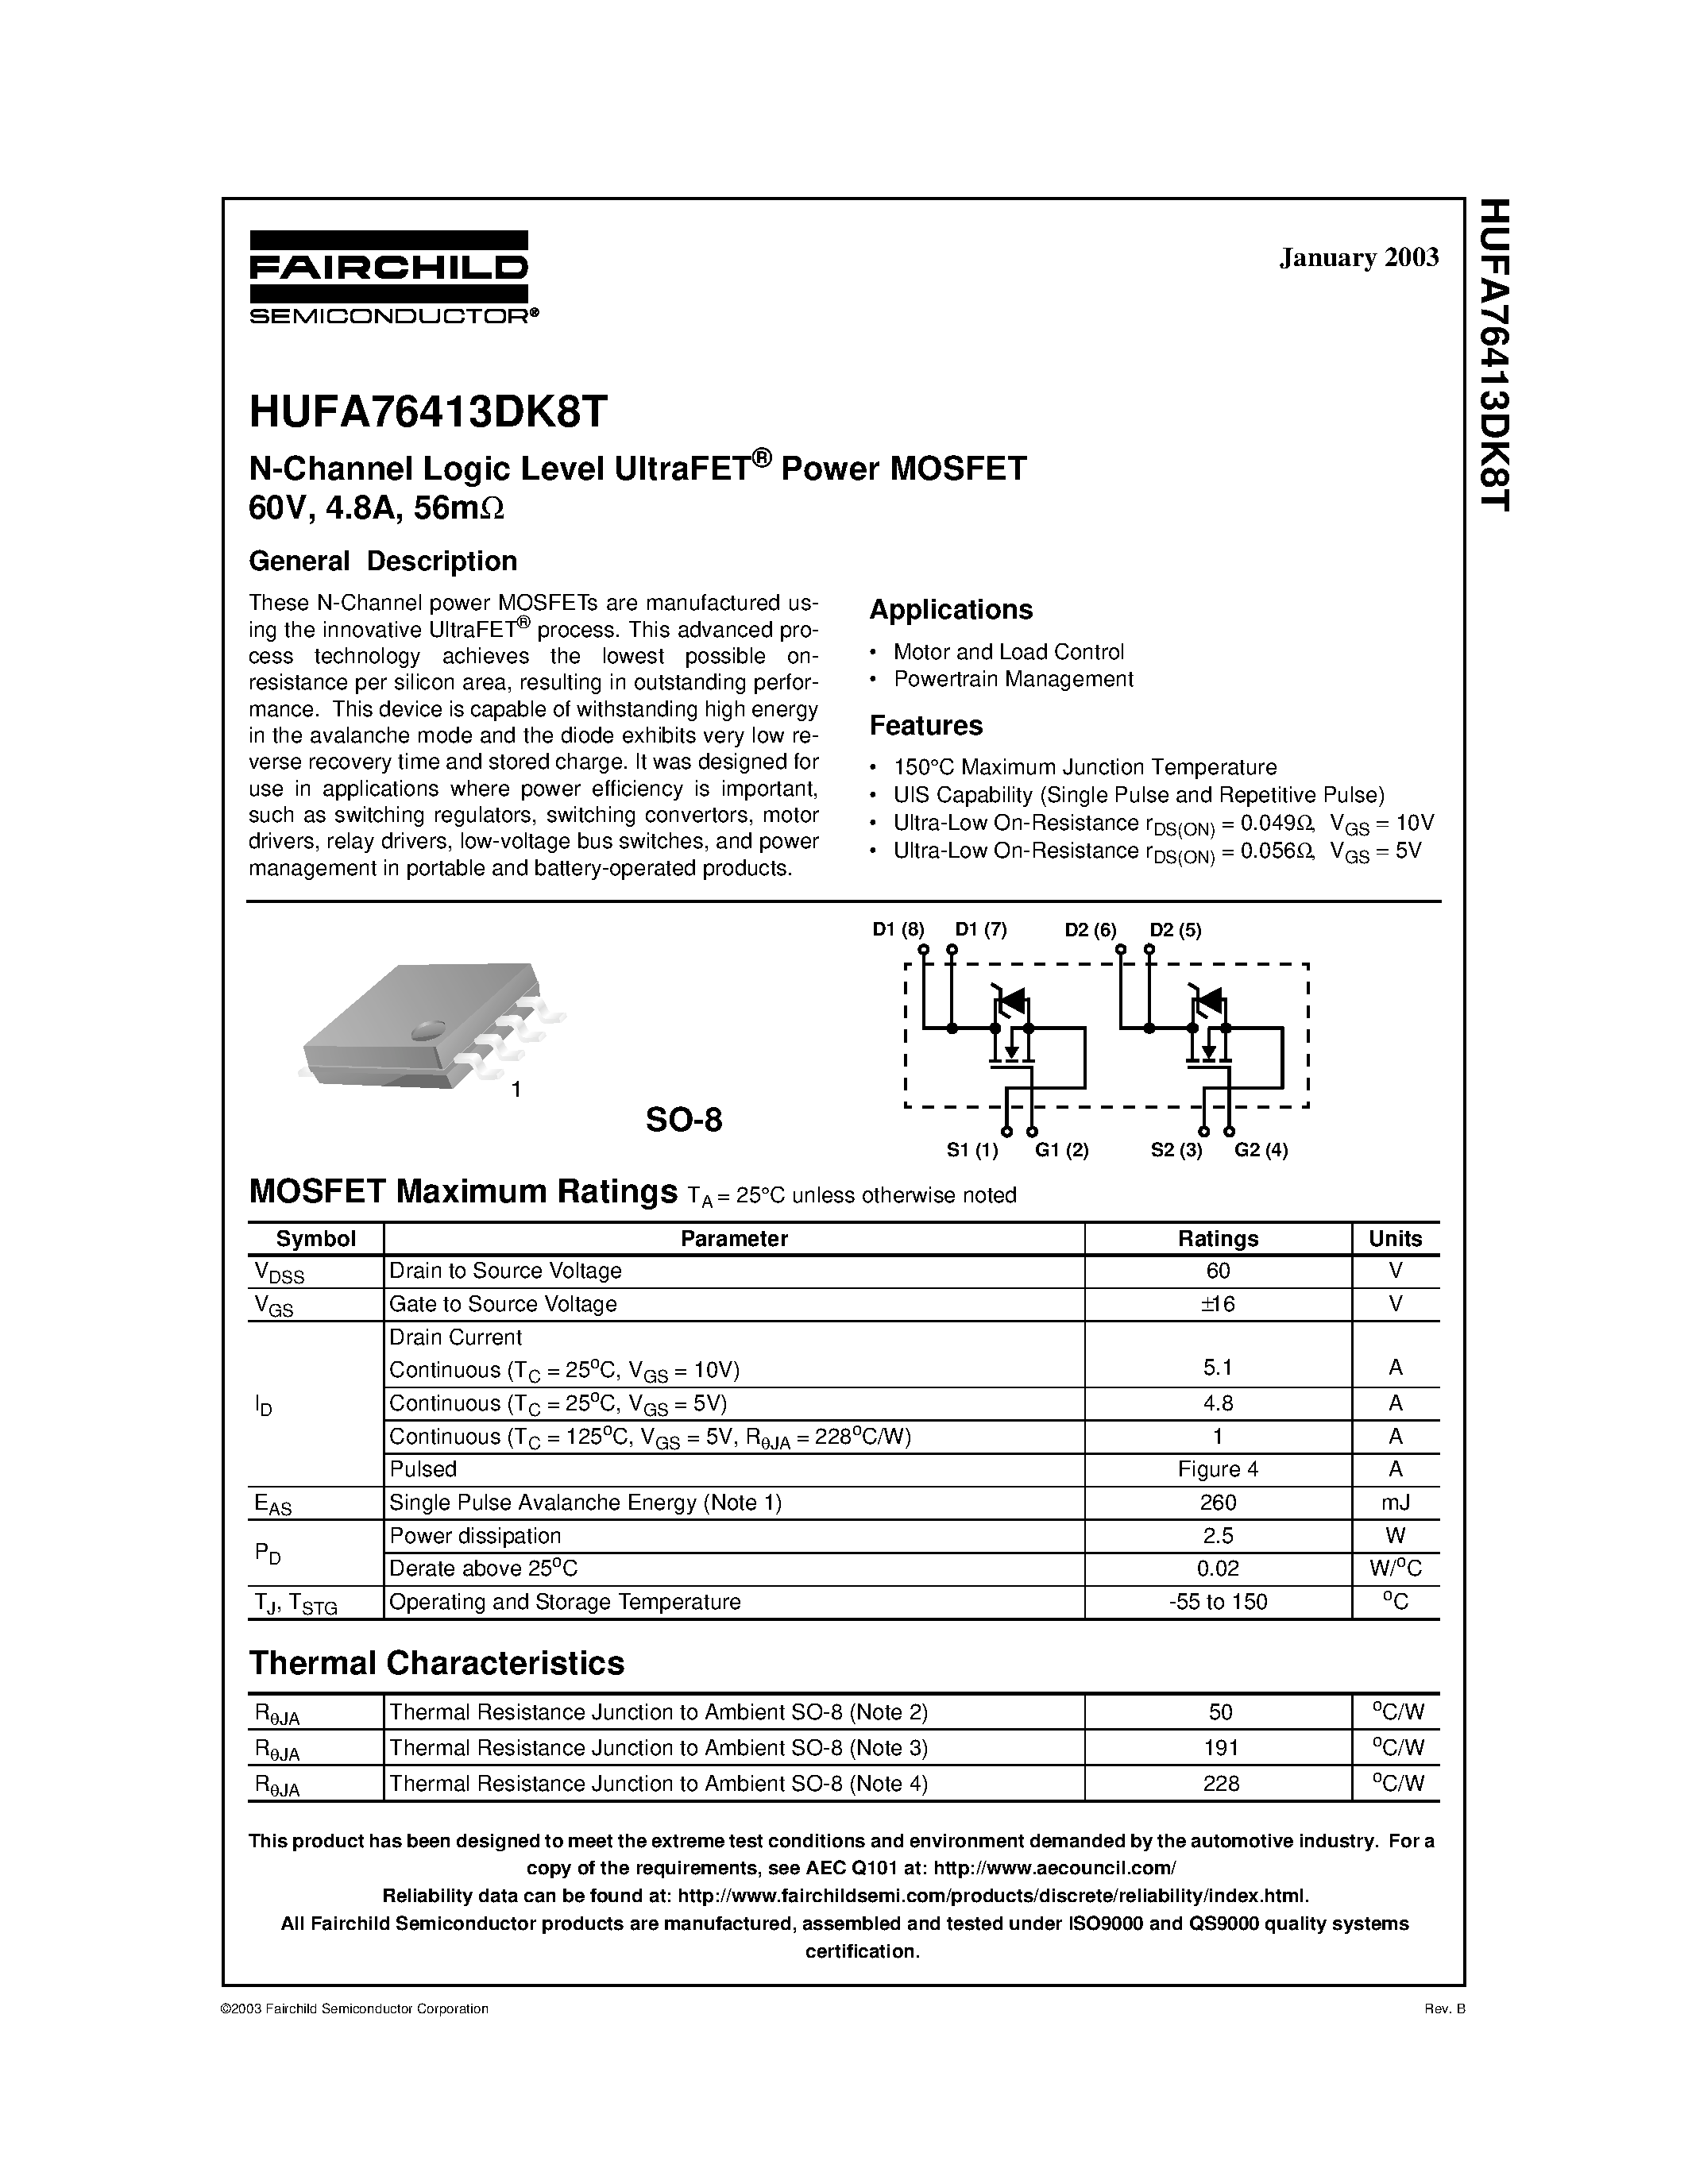 Datasheet HUFA76413DK8T - N-Channel Logic Level UltraFET Power MOSFET 60V/ 4.8A/ 56m page 1